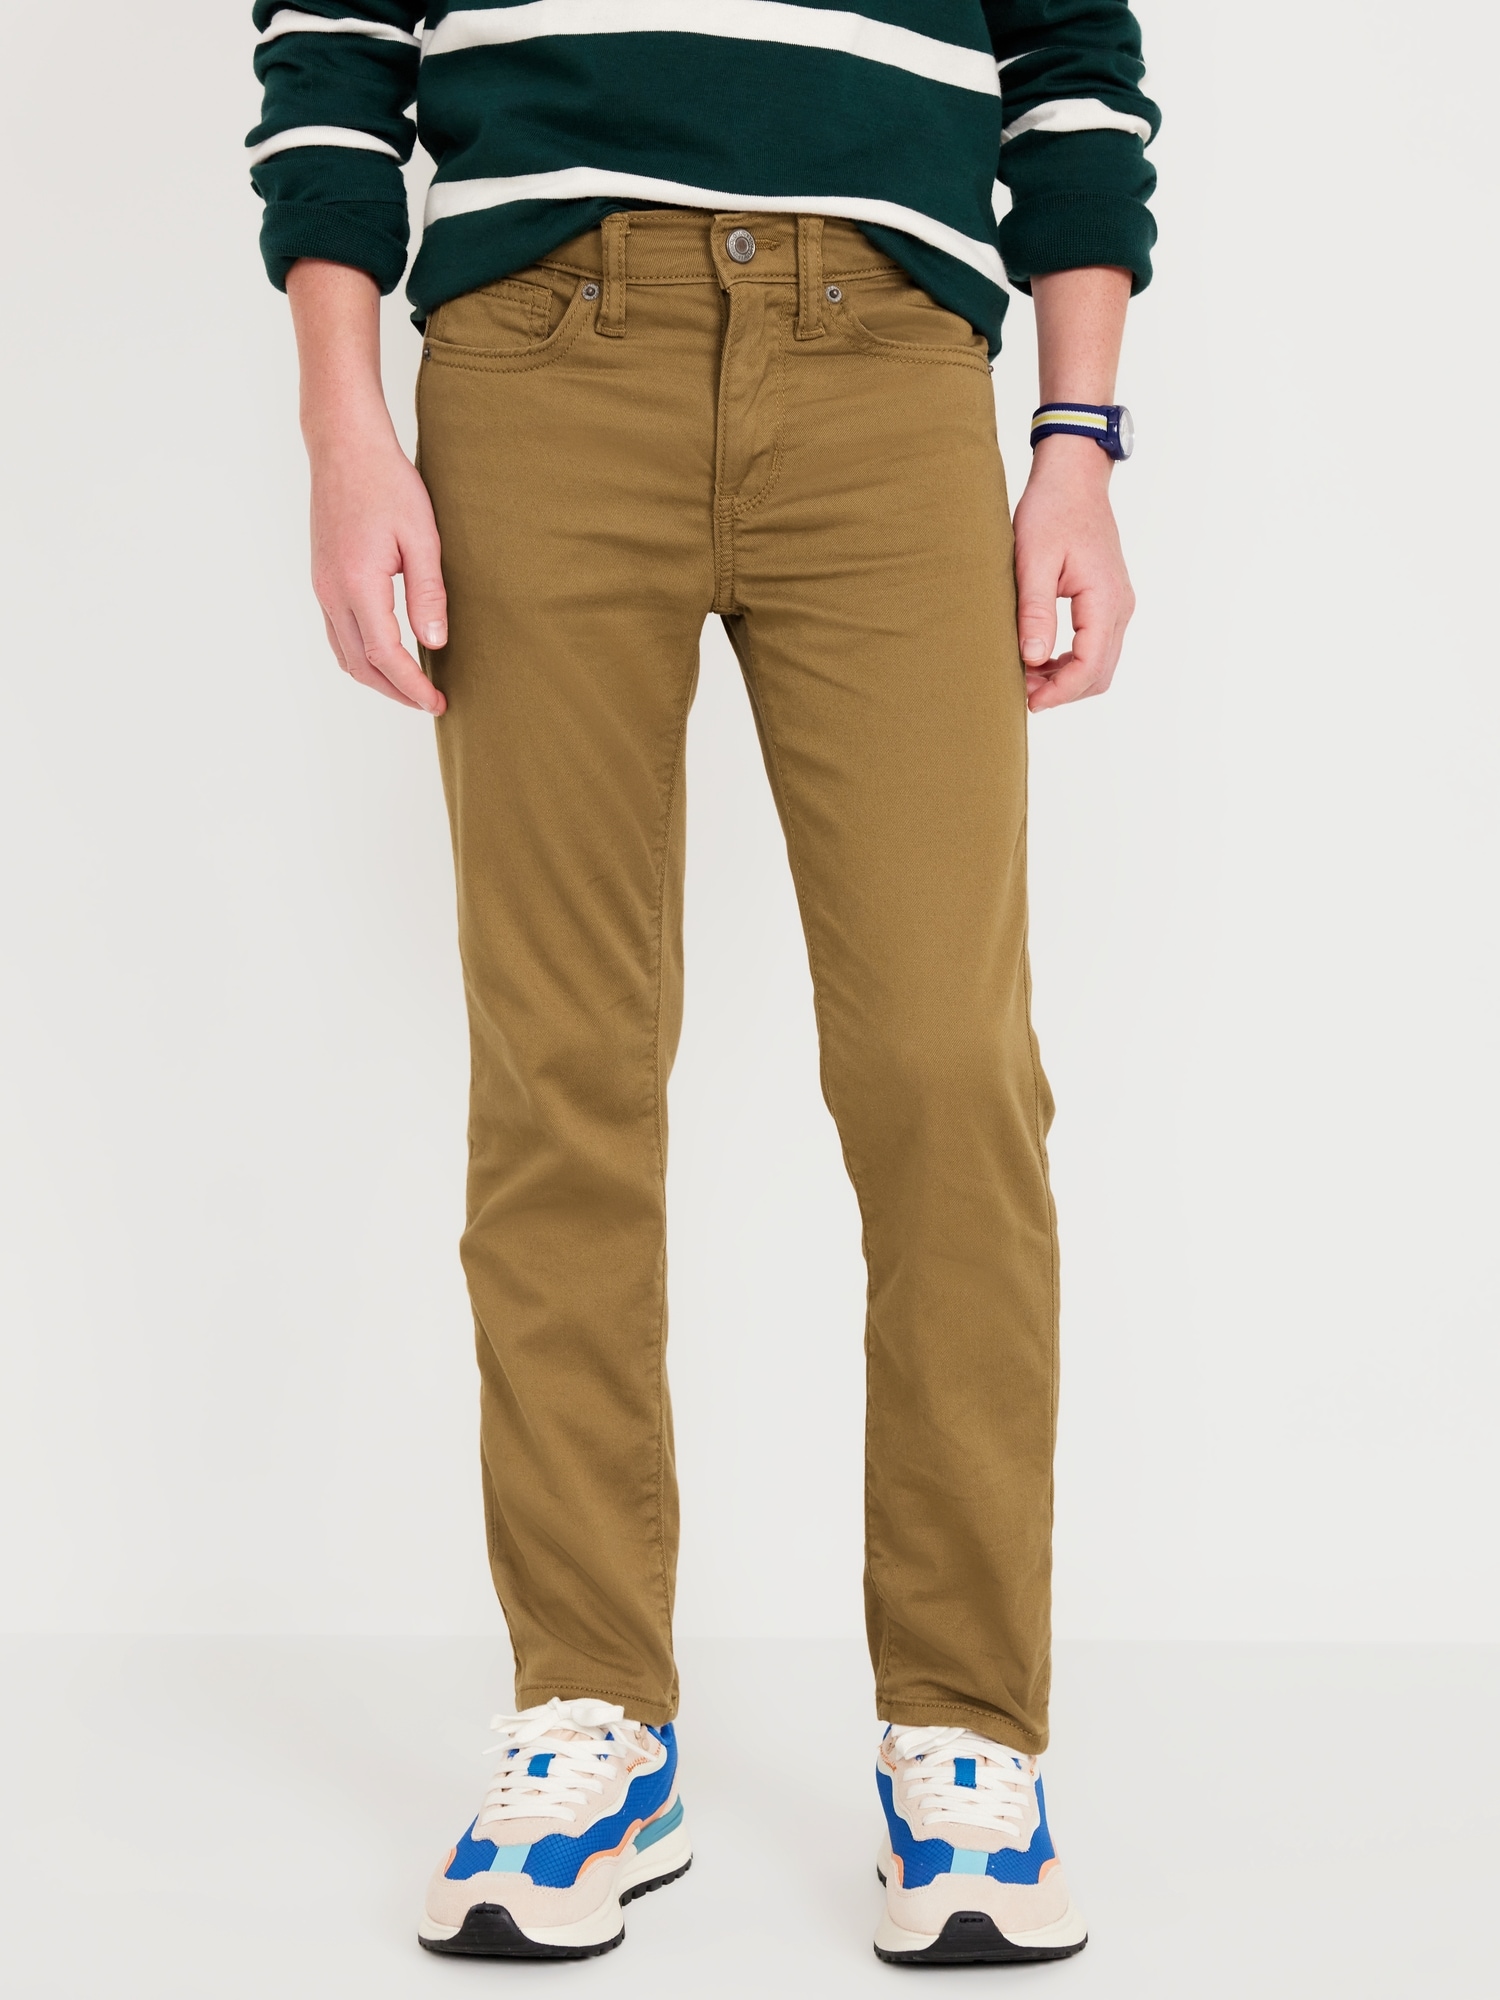 Old Navy Teen Boy Pants Slim Beige Size 14 Khaki